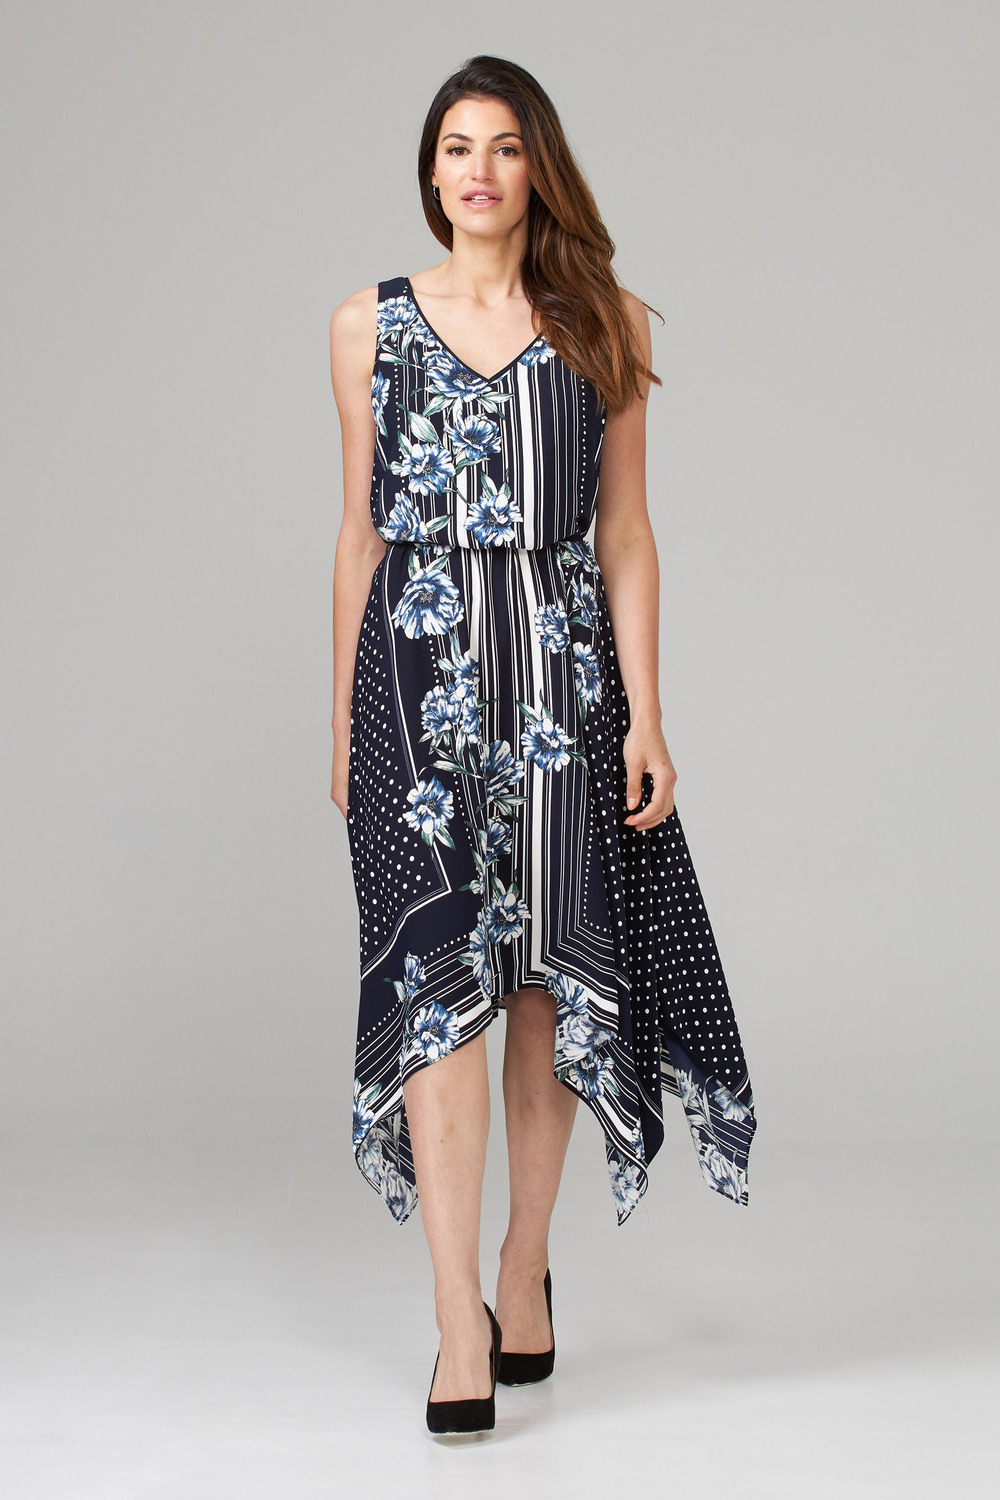 Joseph Ribkoff Dress Style 202231. Midnight Blue/multi